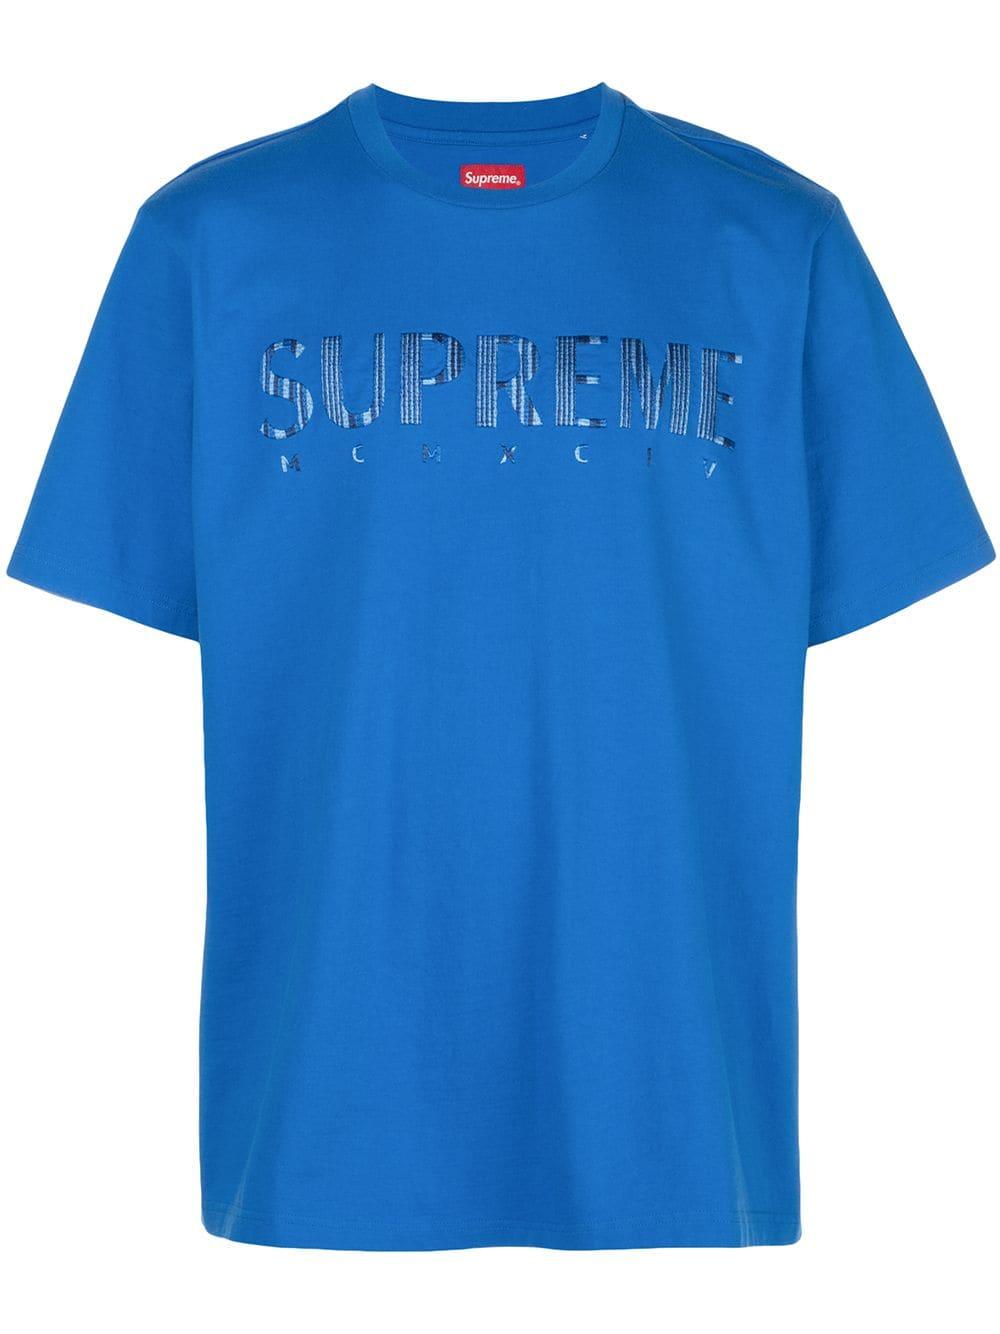 Supreme Cotton Gradient Logo T-shirt in Blue for Men - Lyst